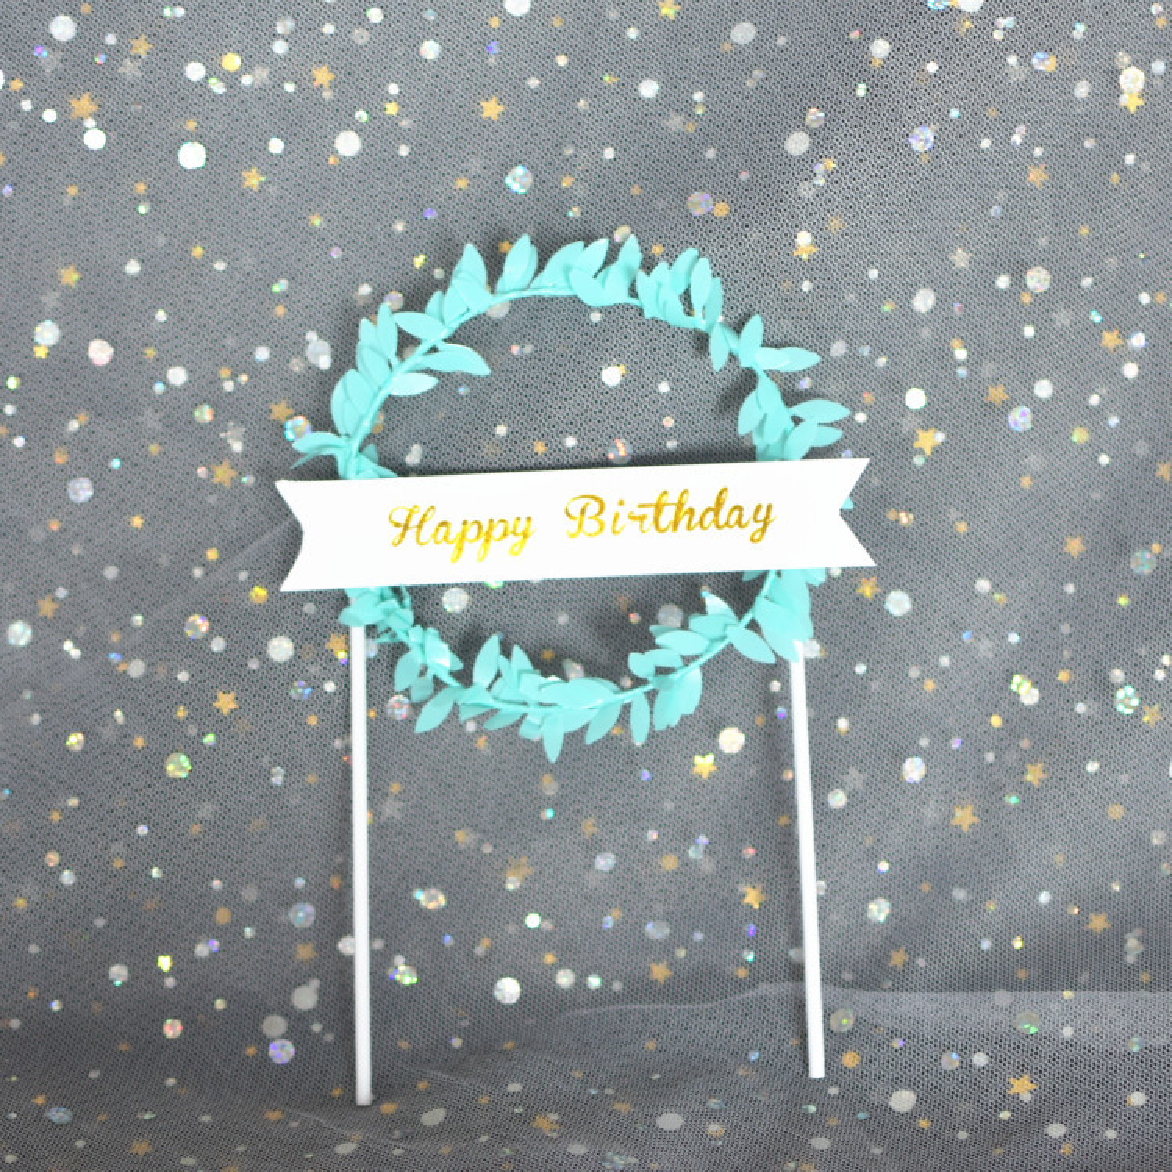 Happy Birthday Cake Topper - Cake Decoration -  blue - Rampant Coffee Company